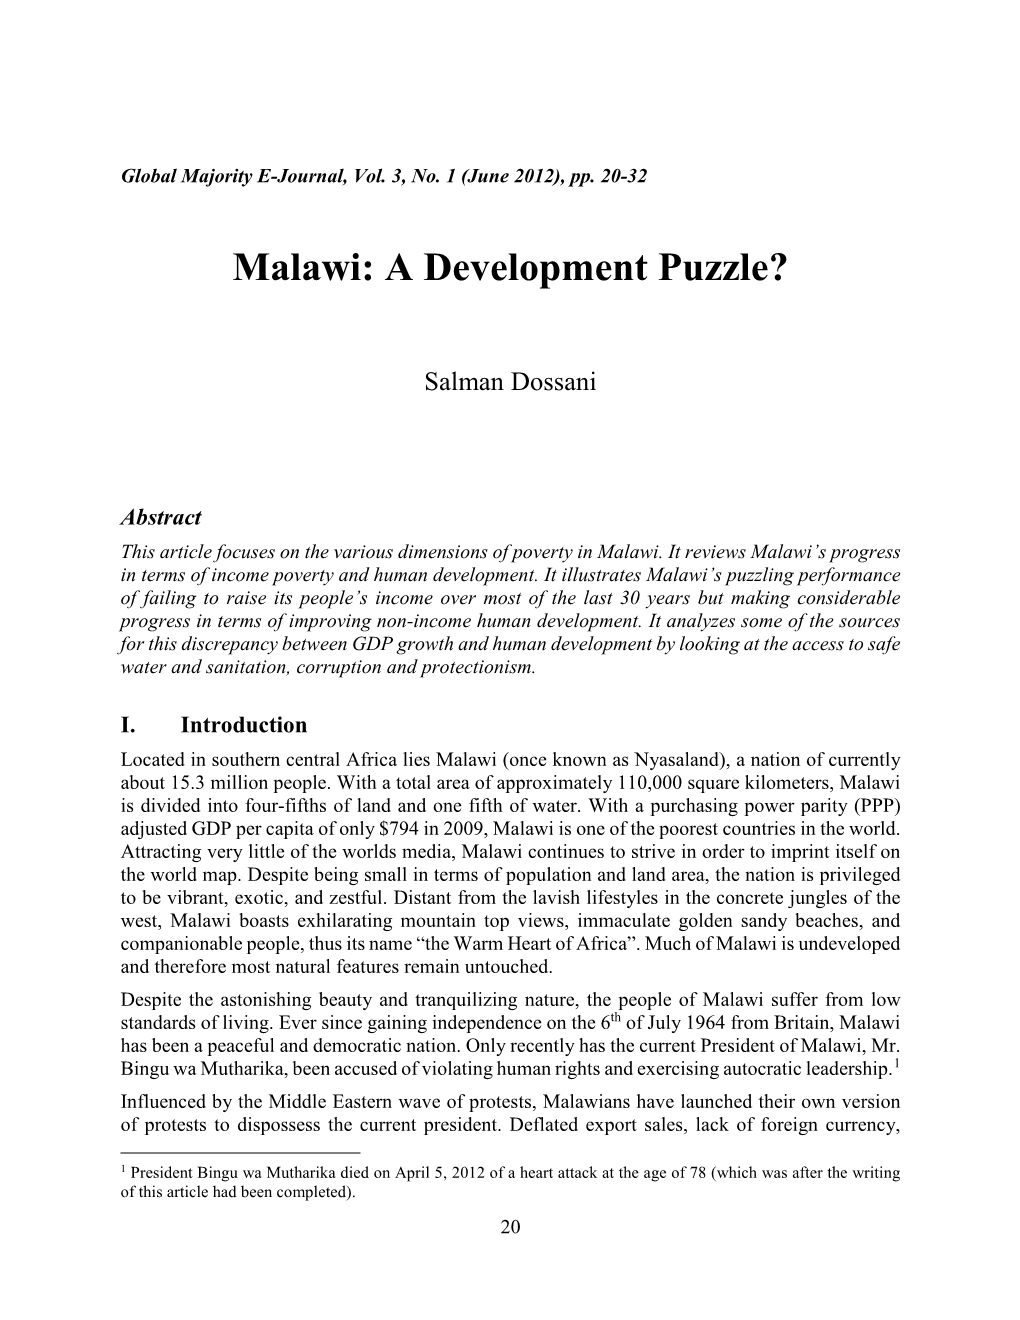 Malawi: a Development Puzzle?